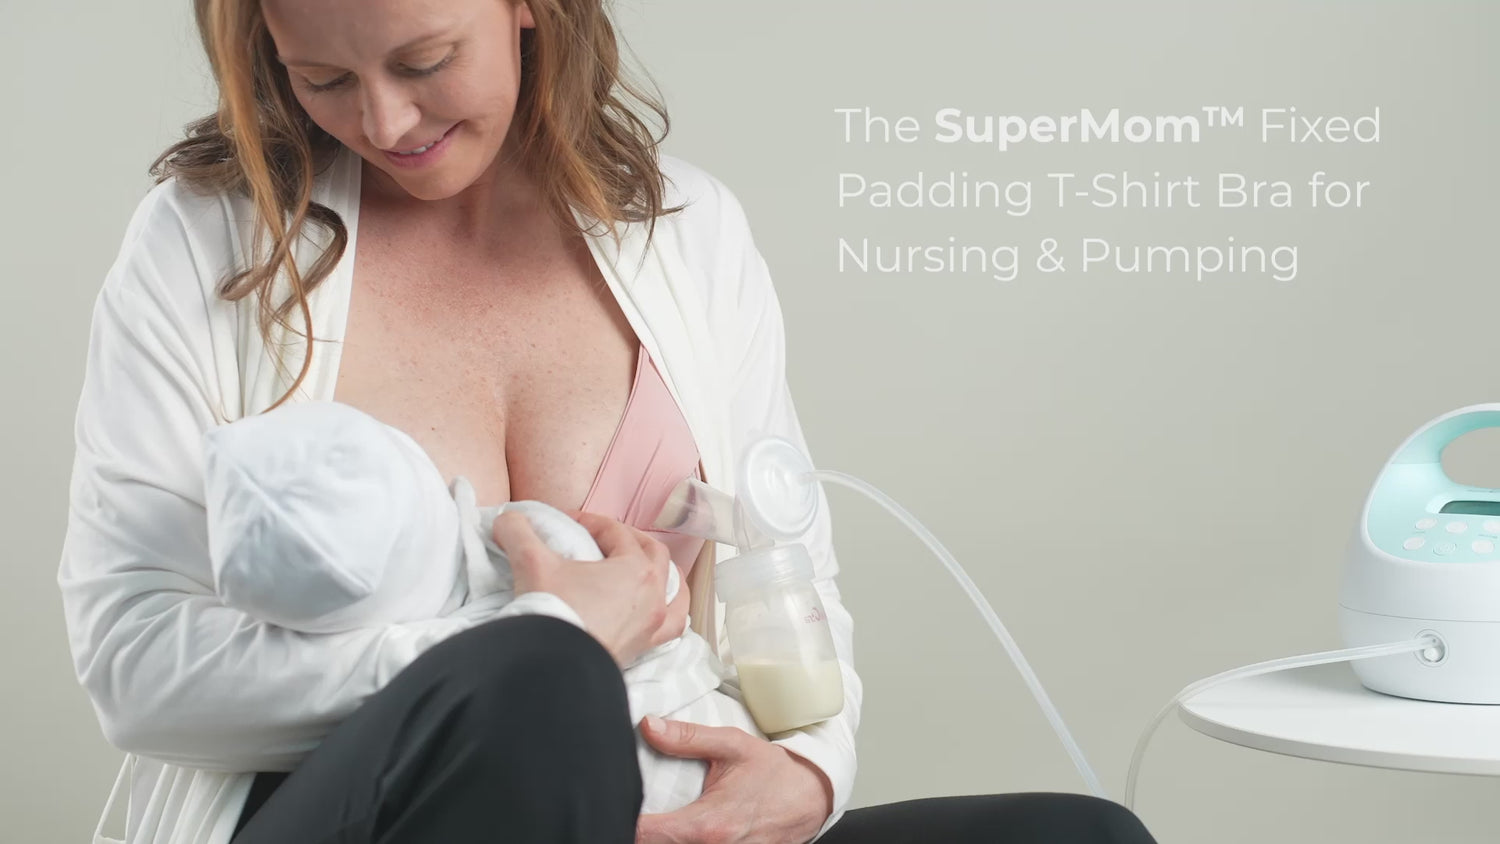  Simple Wishes Supermom Pumping And Nursing Bra